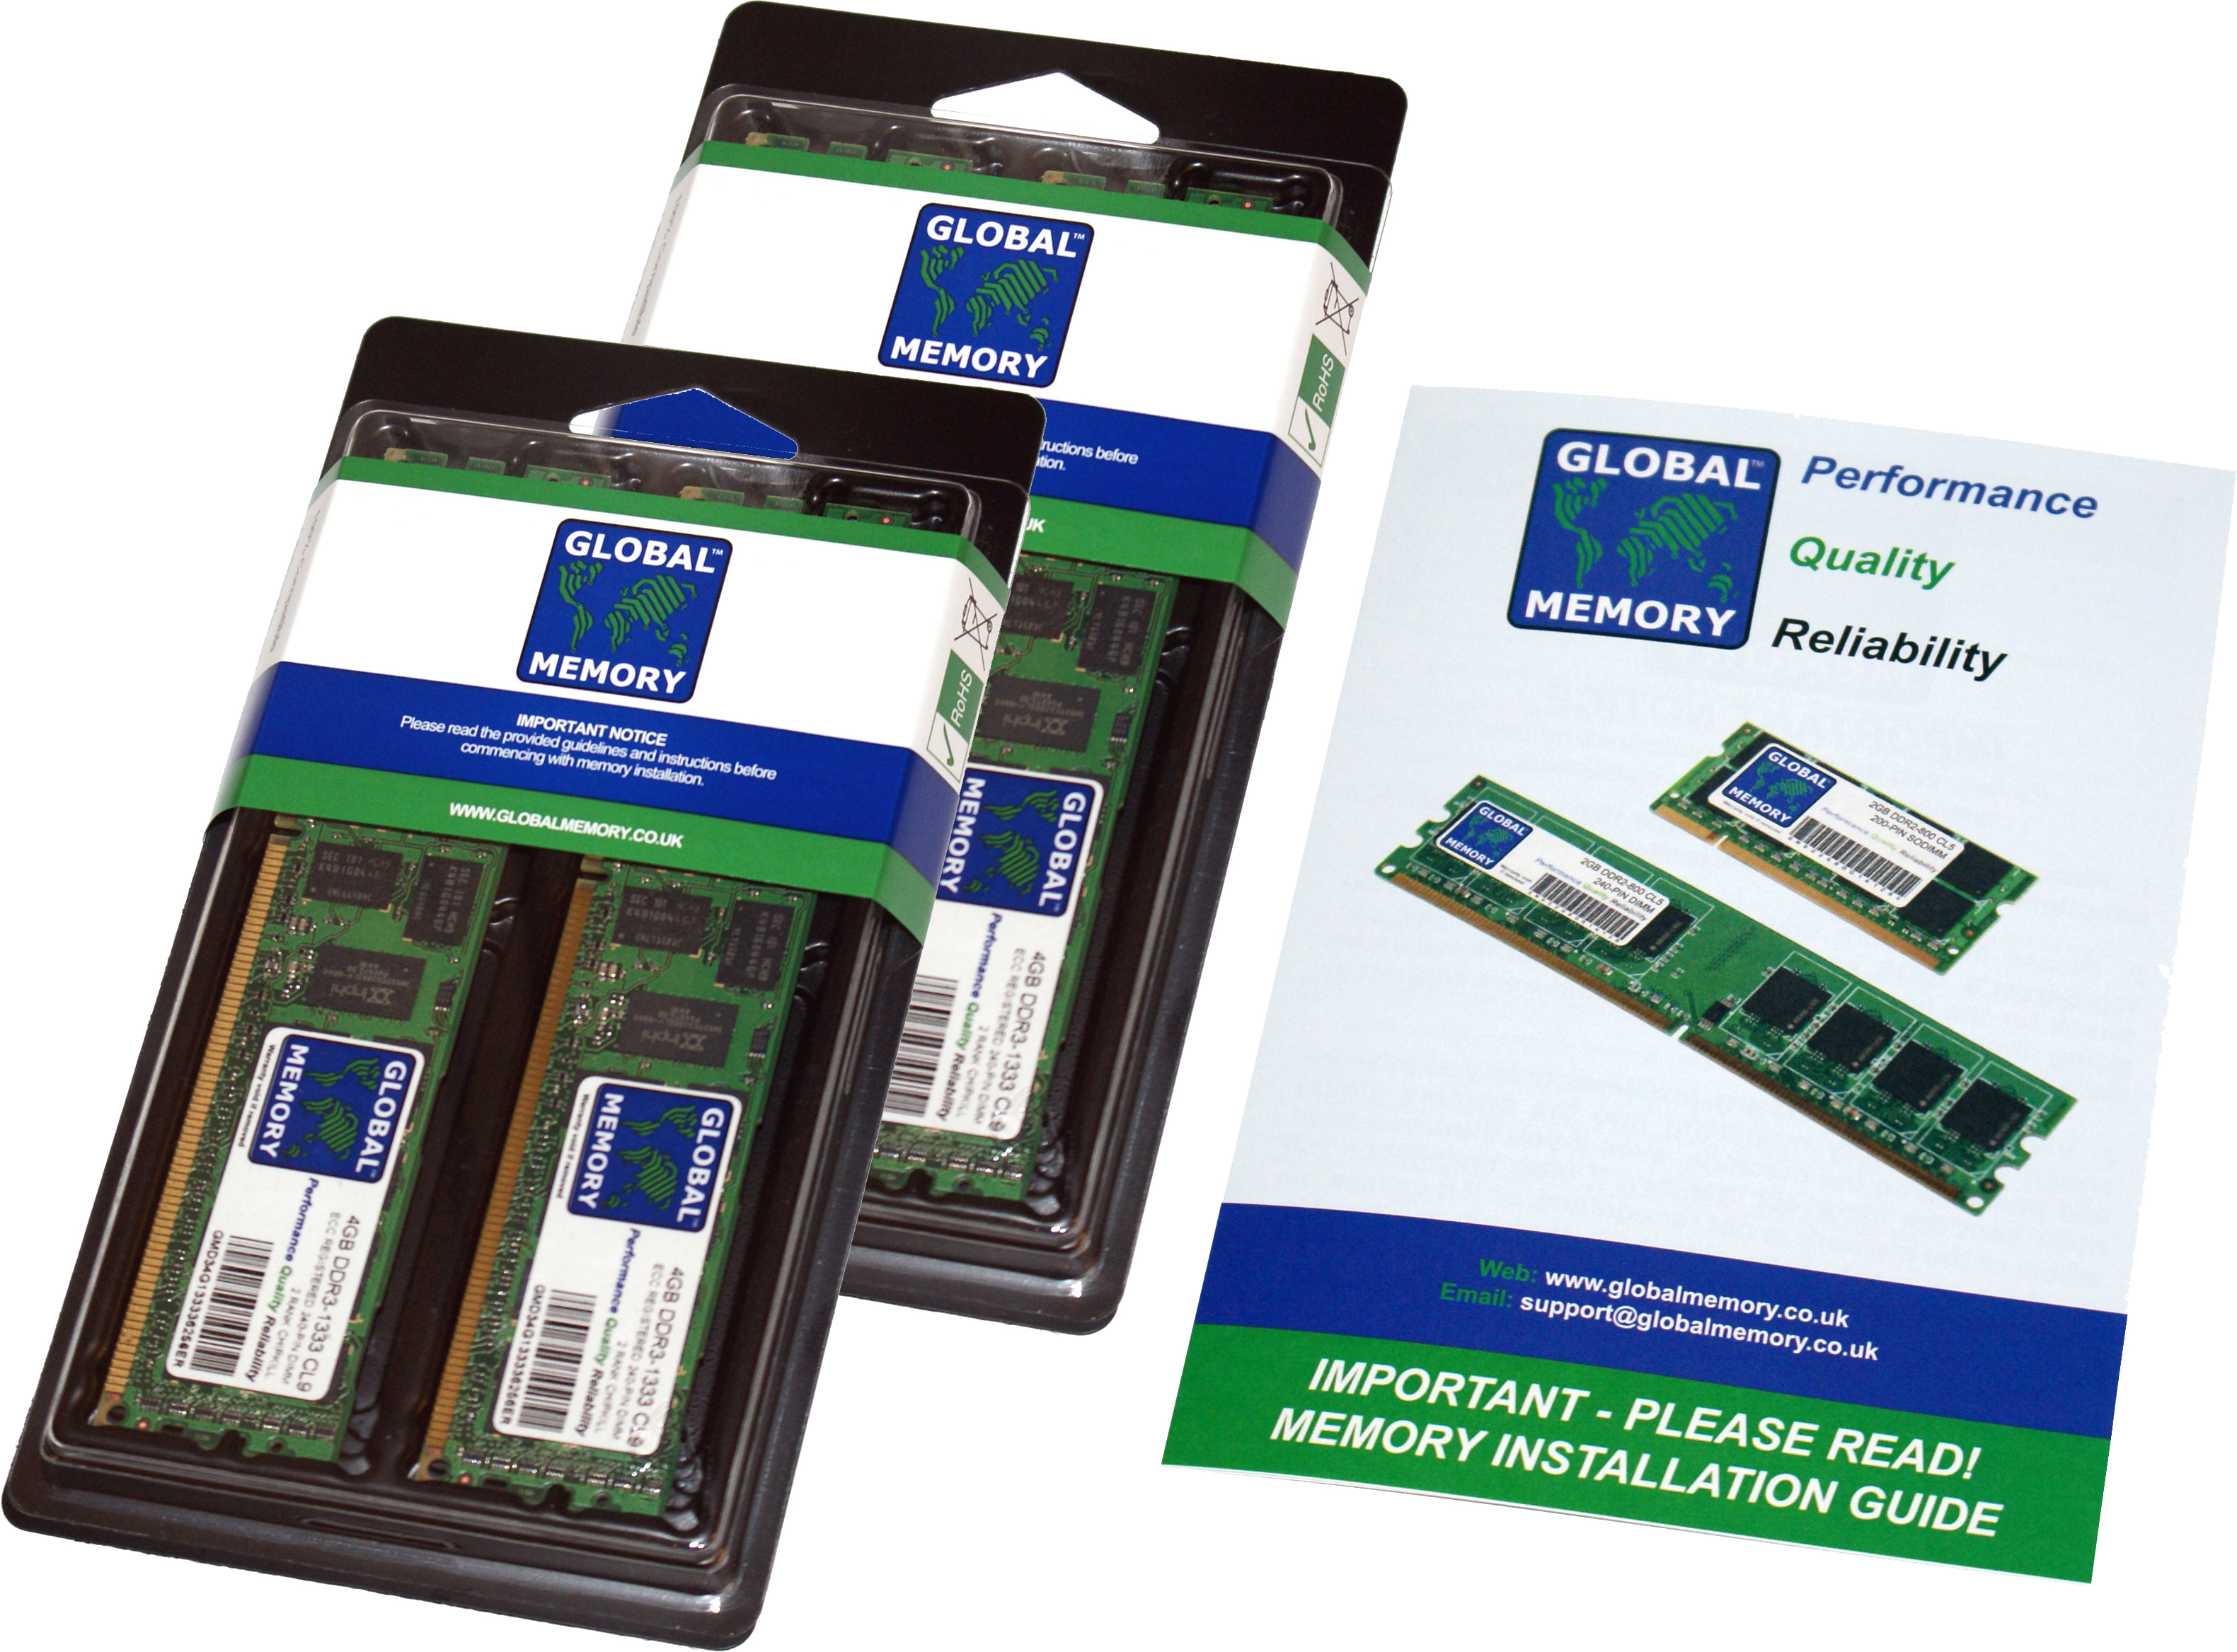 128GB (4 x 32GB) DDR4 2400MHz PC4-19200 288-PIN ECC REGISTERED DIMM (RDIMM) MEMORY RAM KIT FOR FUJITSU SERVERS/WORKSTATIONS (8 RANK KIT CHIPKILL)